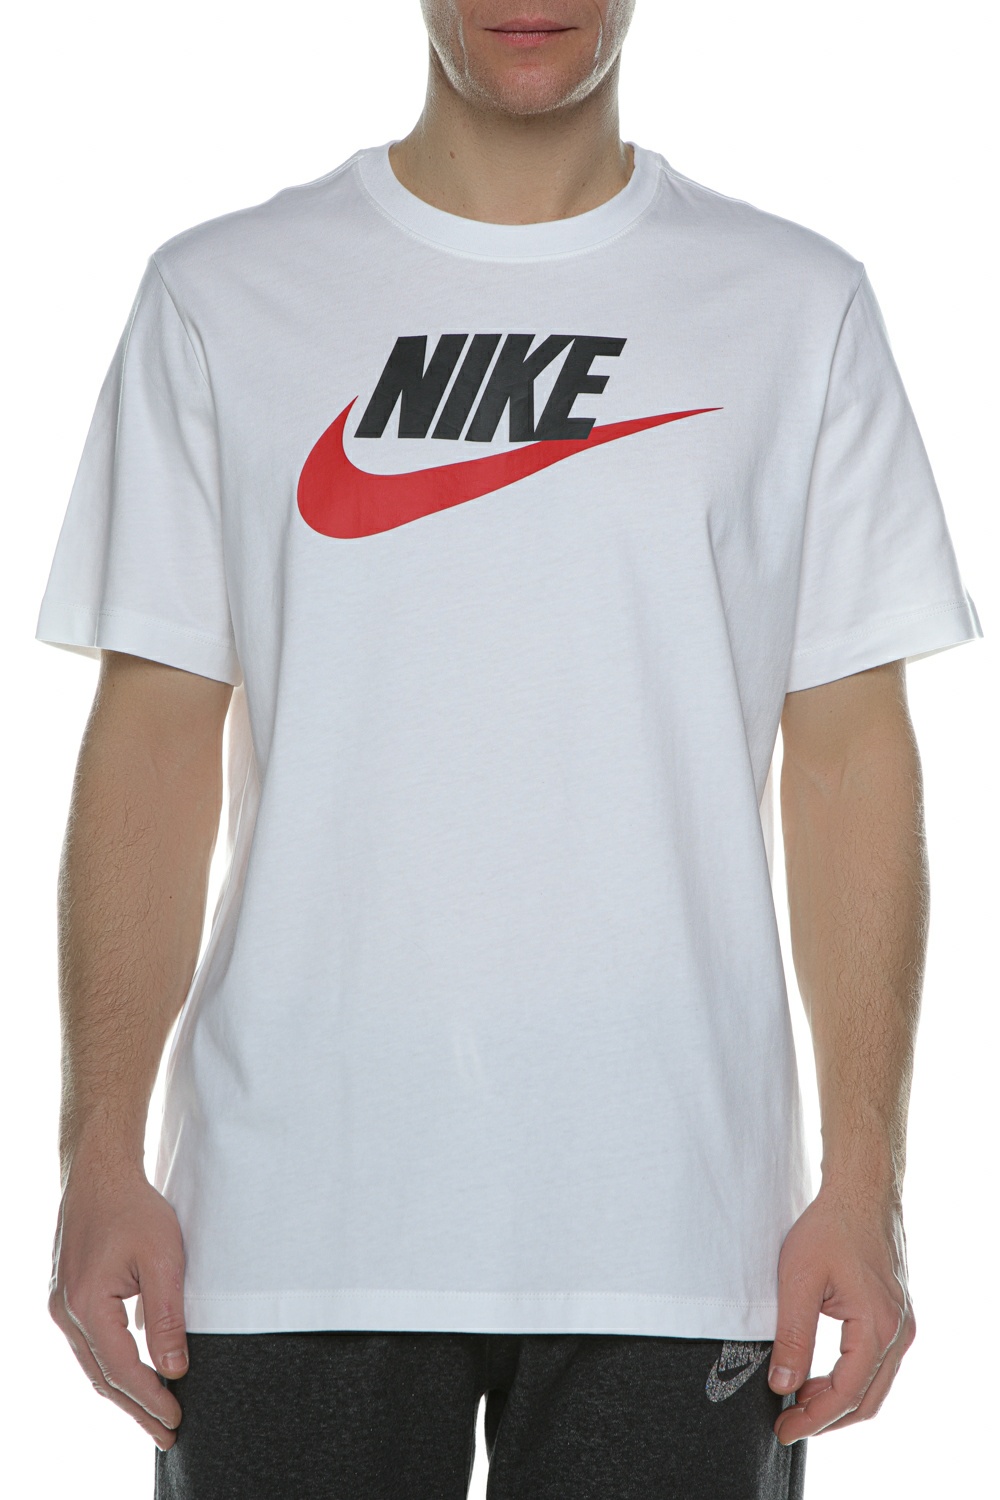 NIKE - Ανδρικό t-shirt NIKE NSW TEE ICON FUTURA λευκό Ανδρικά/Ρούχα/Αθλητικά/T-shirt